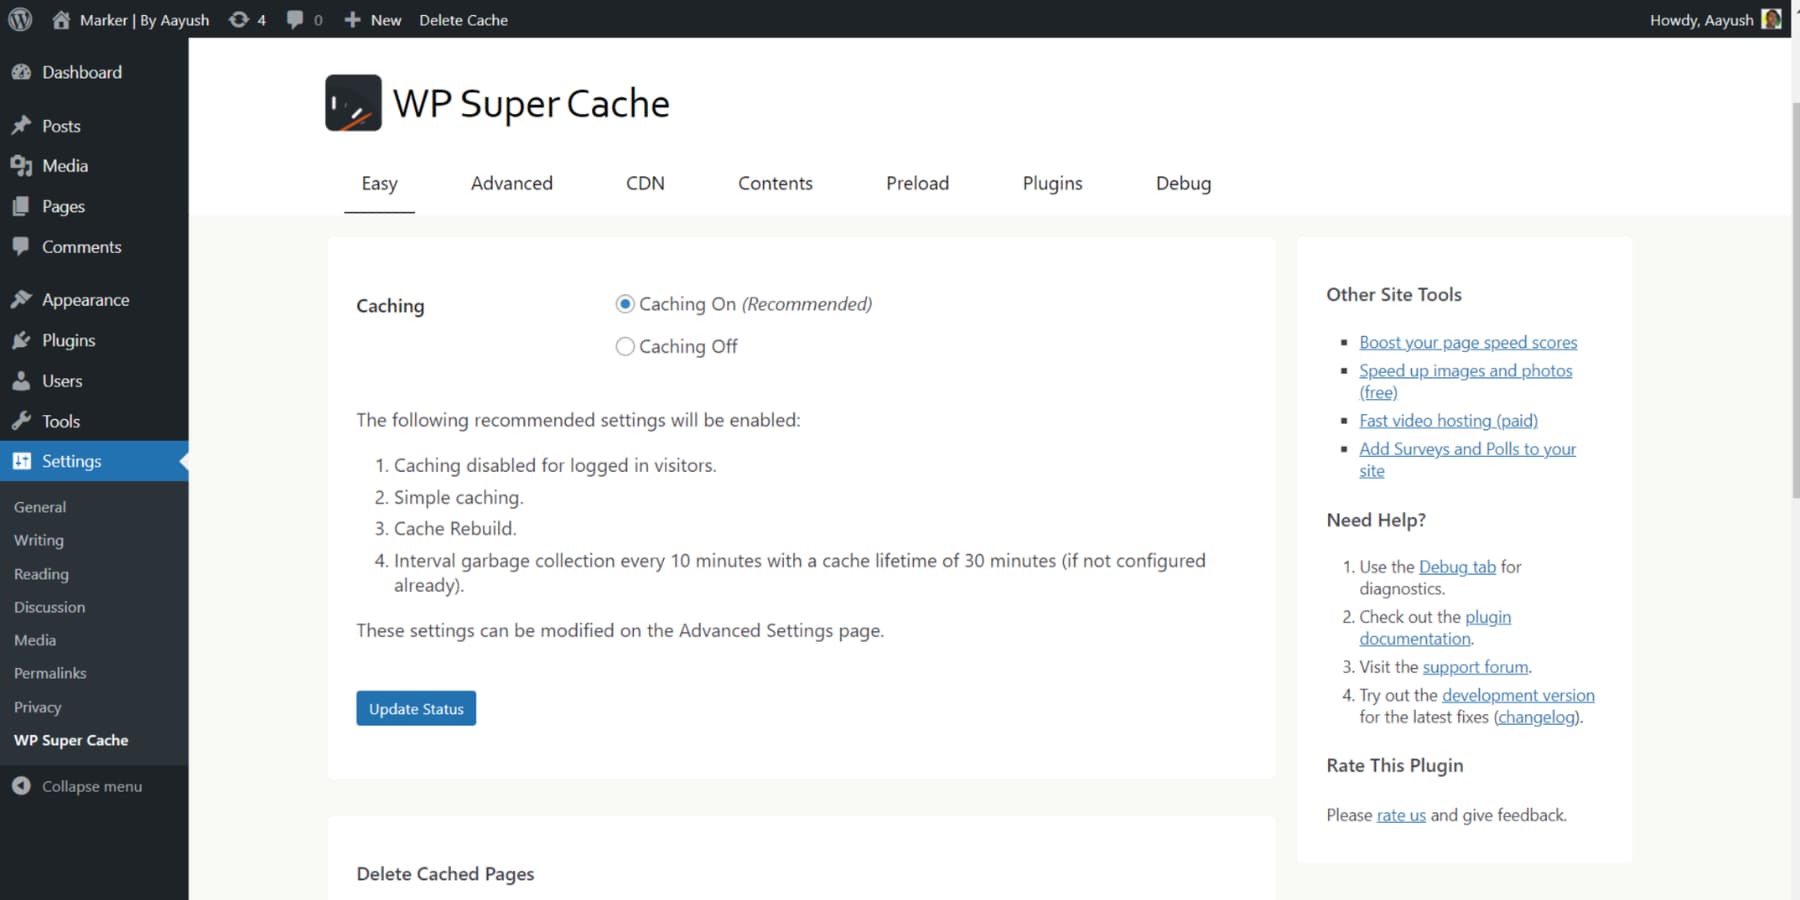 A screenshot of WP Super Cache's User Interface